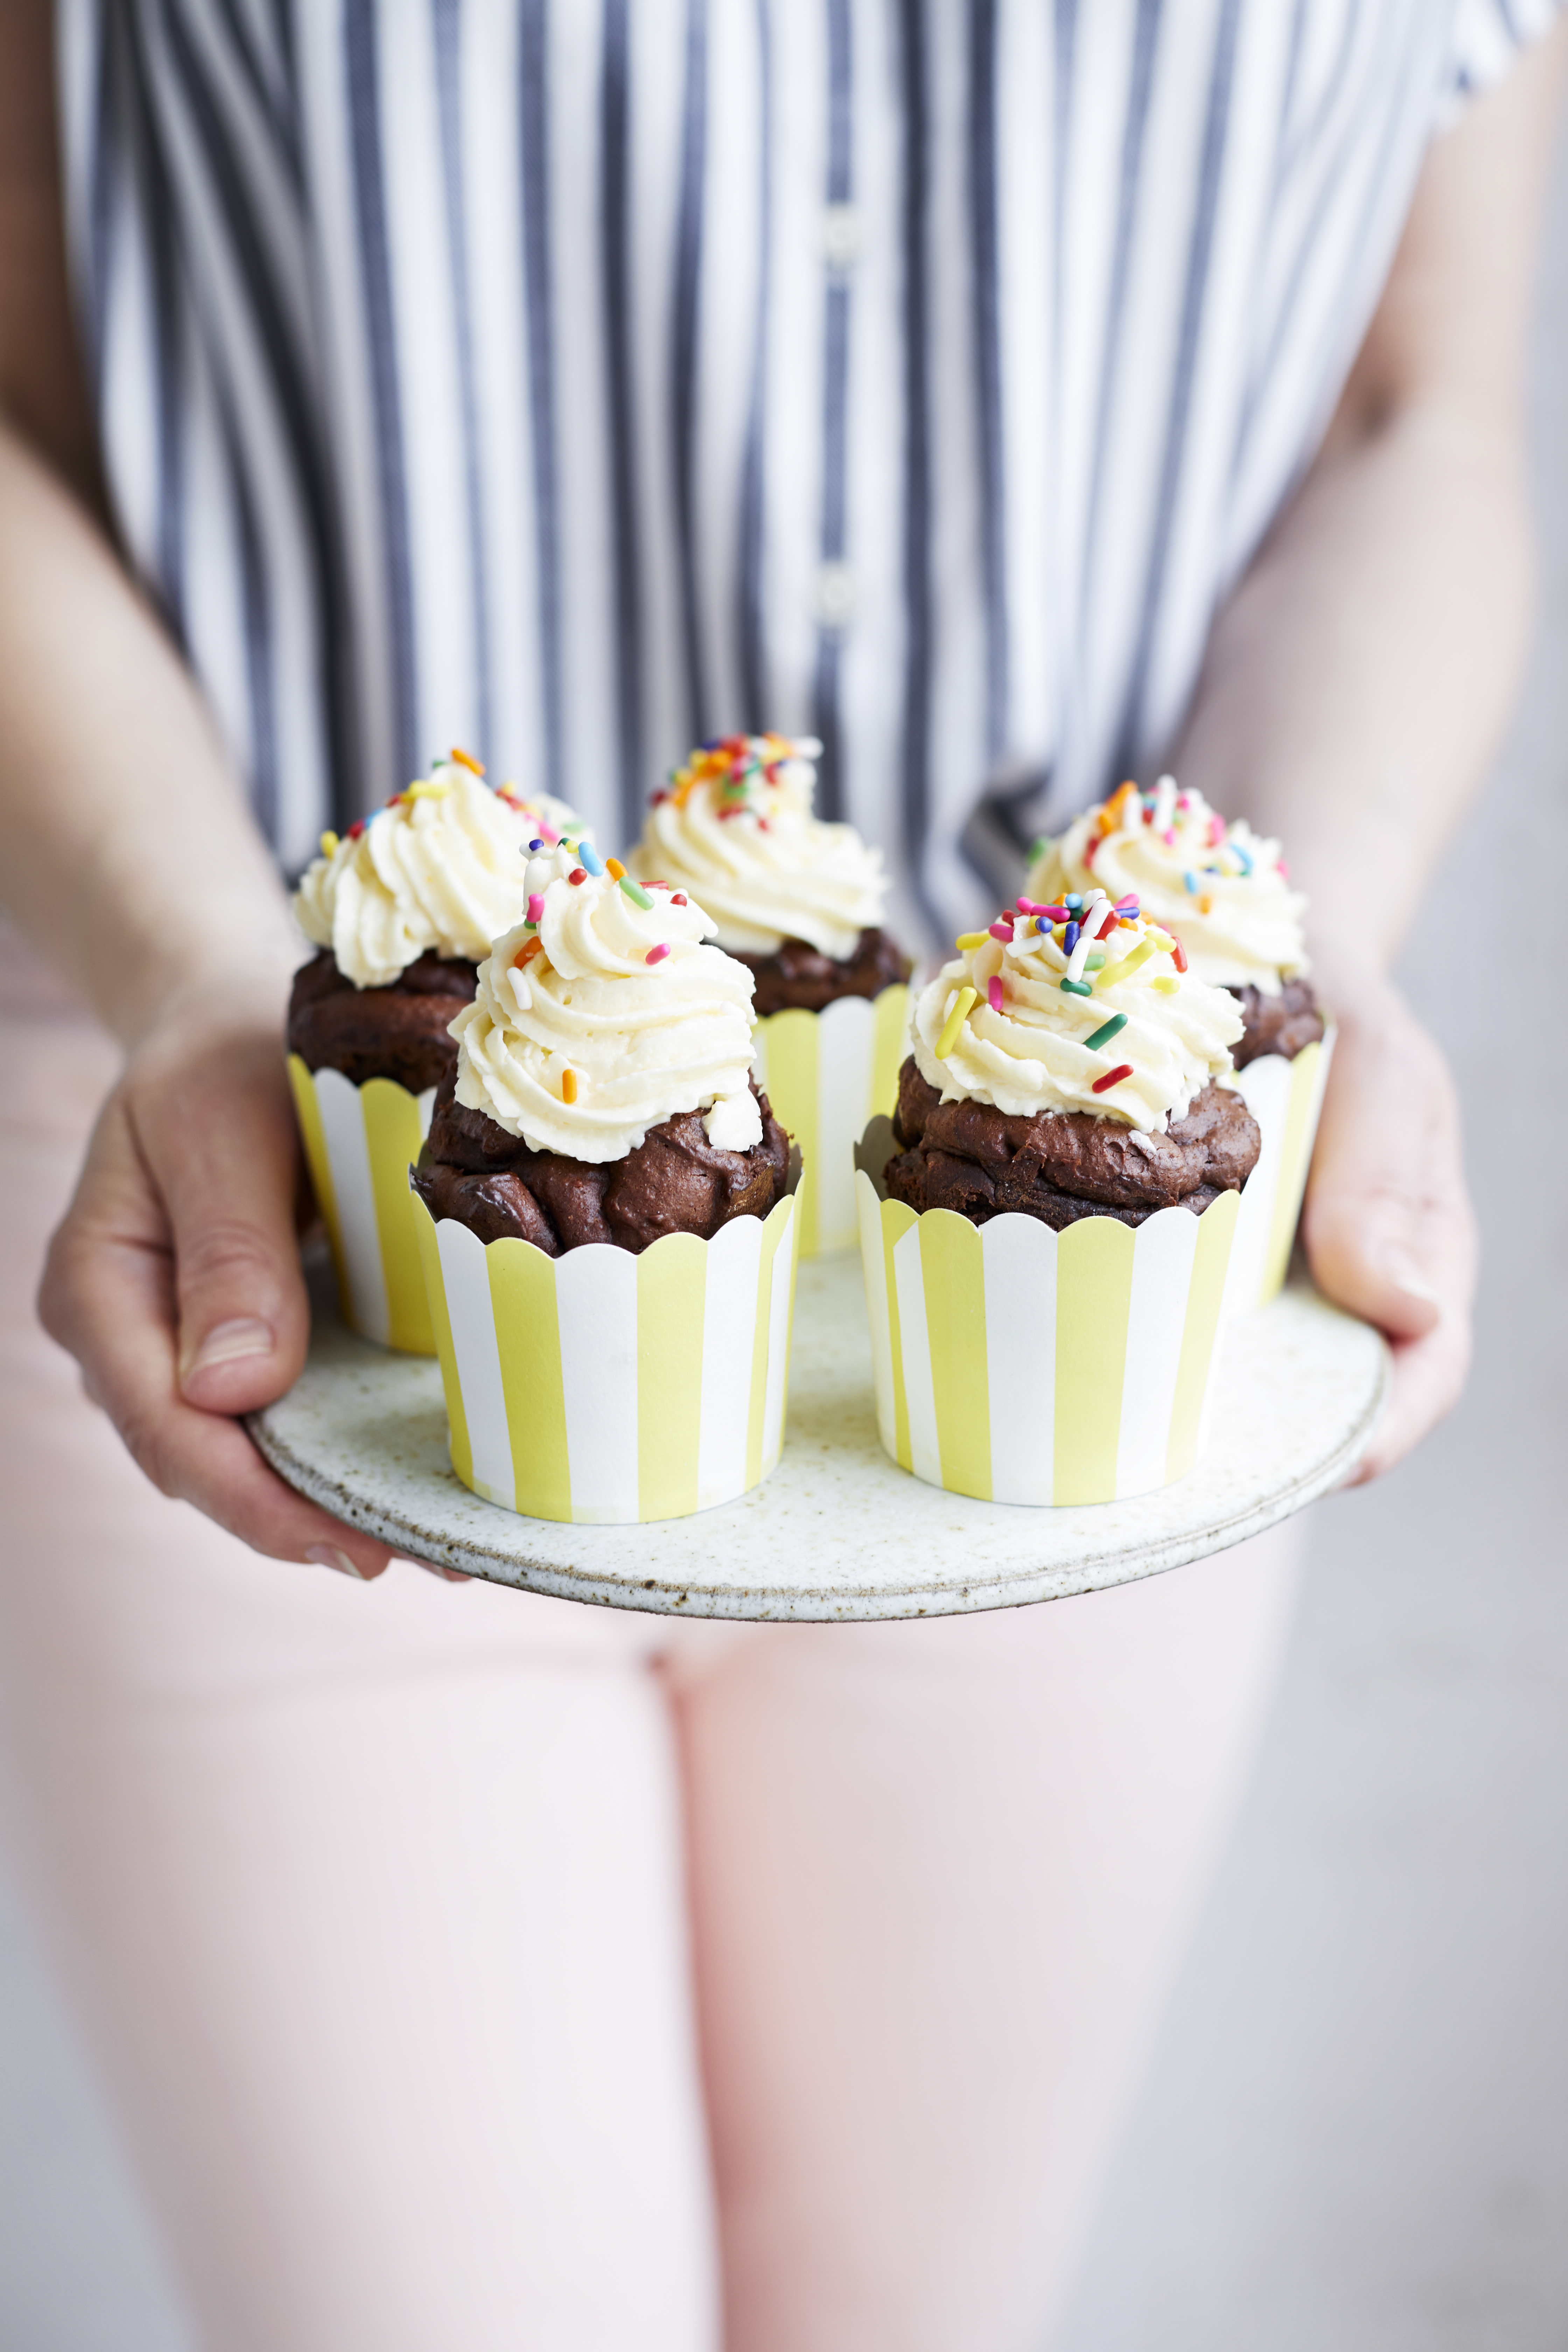 Recipe: Gluten and Dairy Free Chocolate Cupcakes